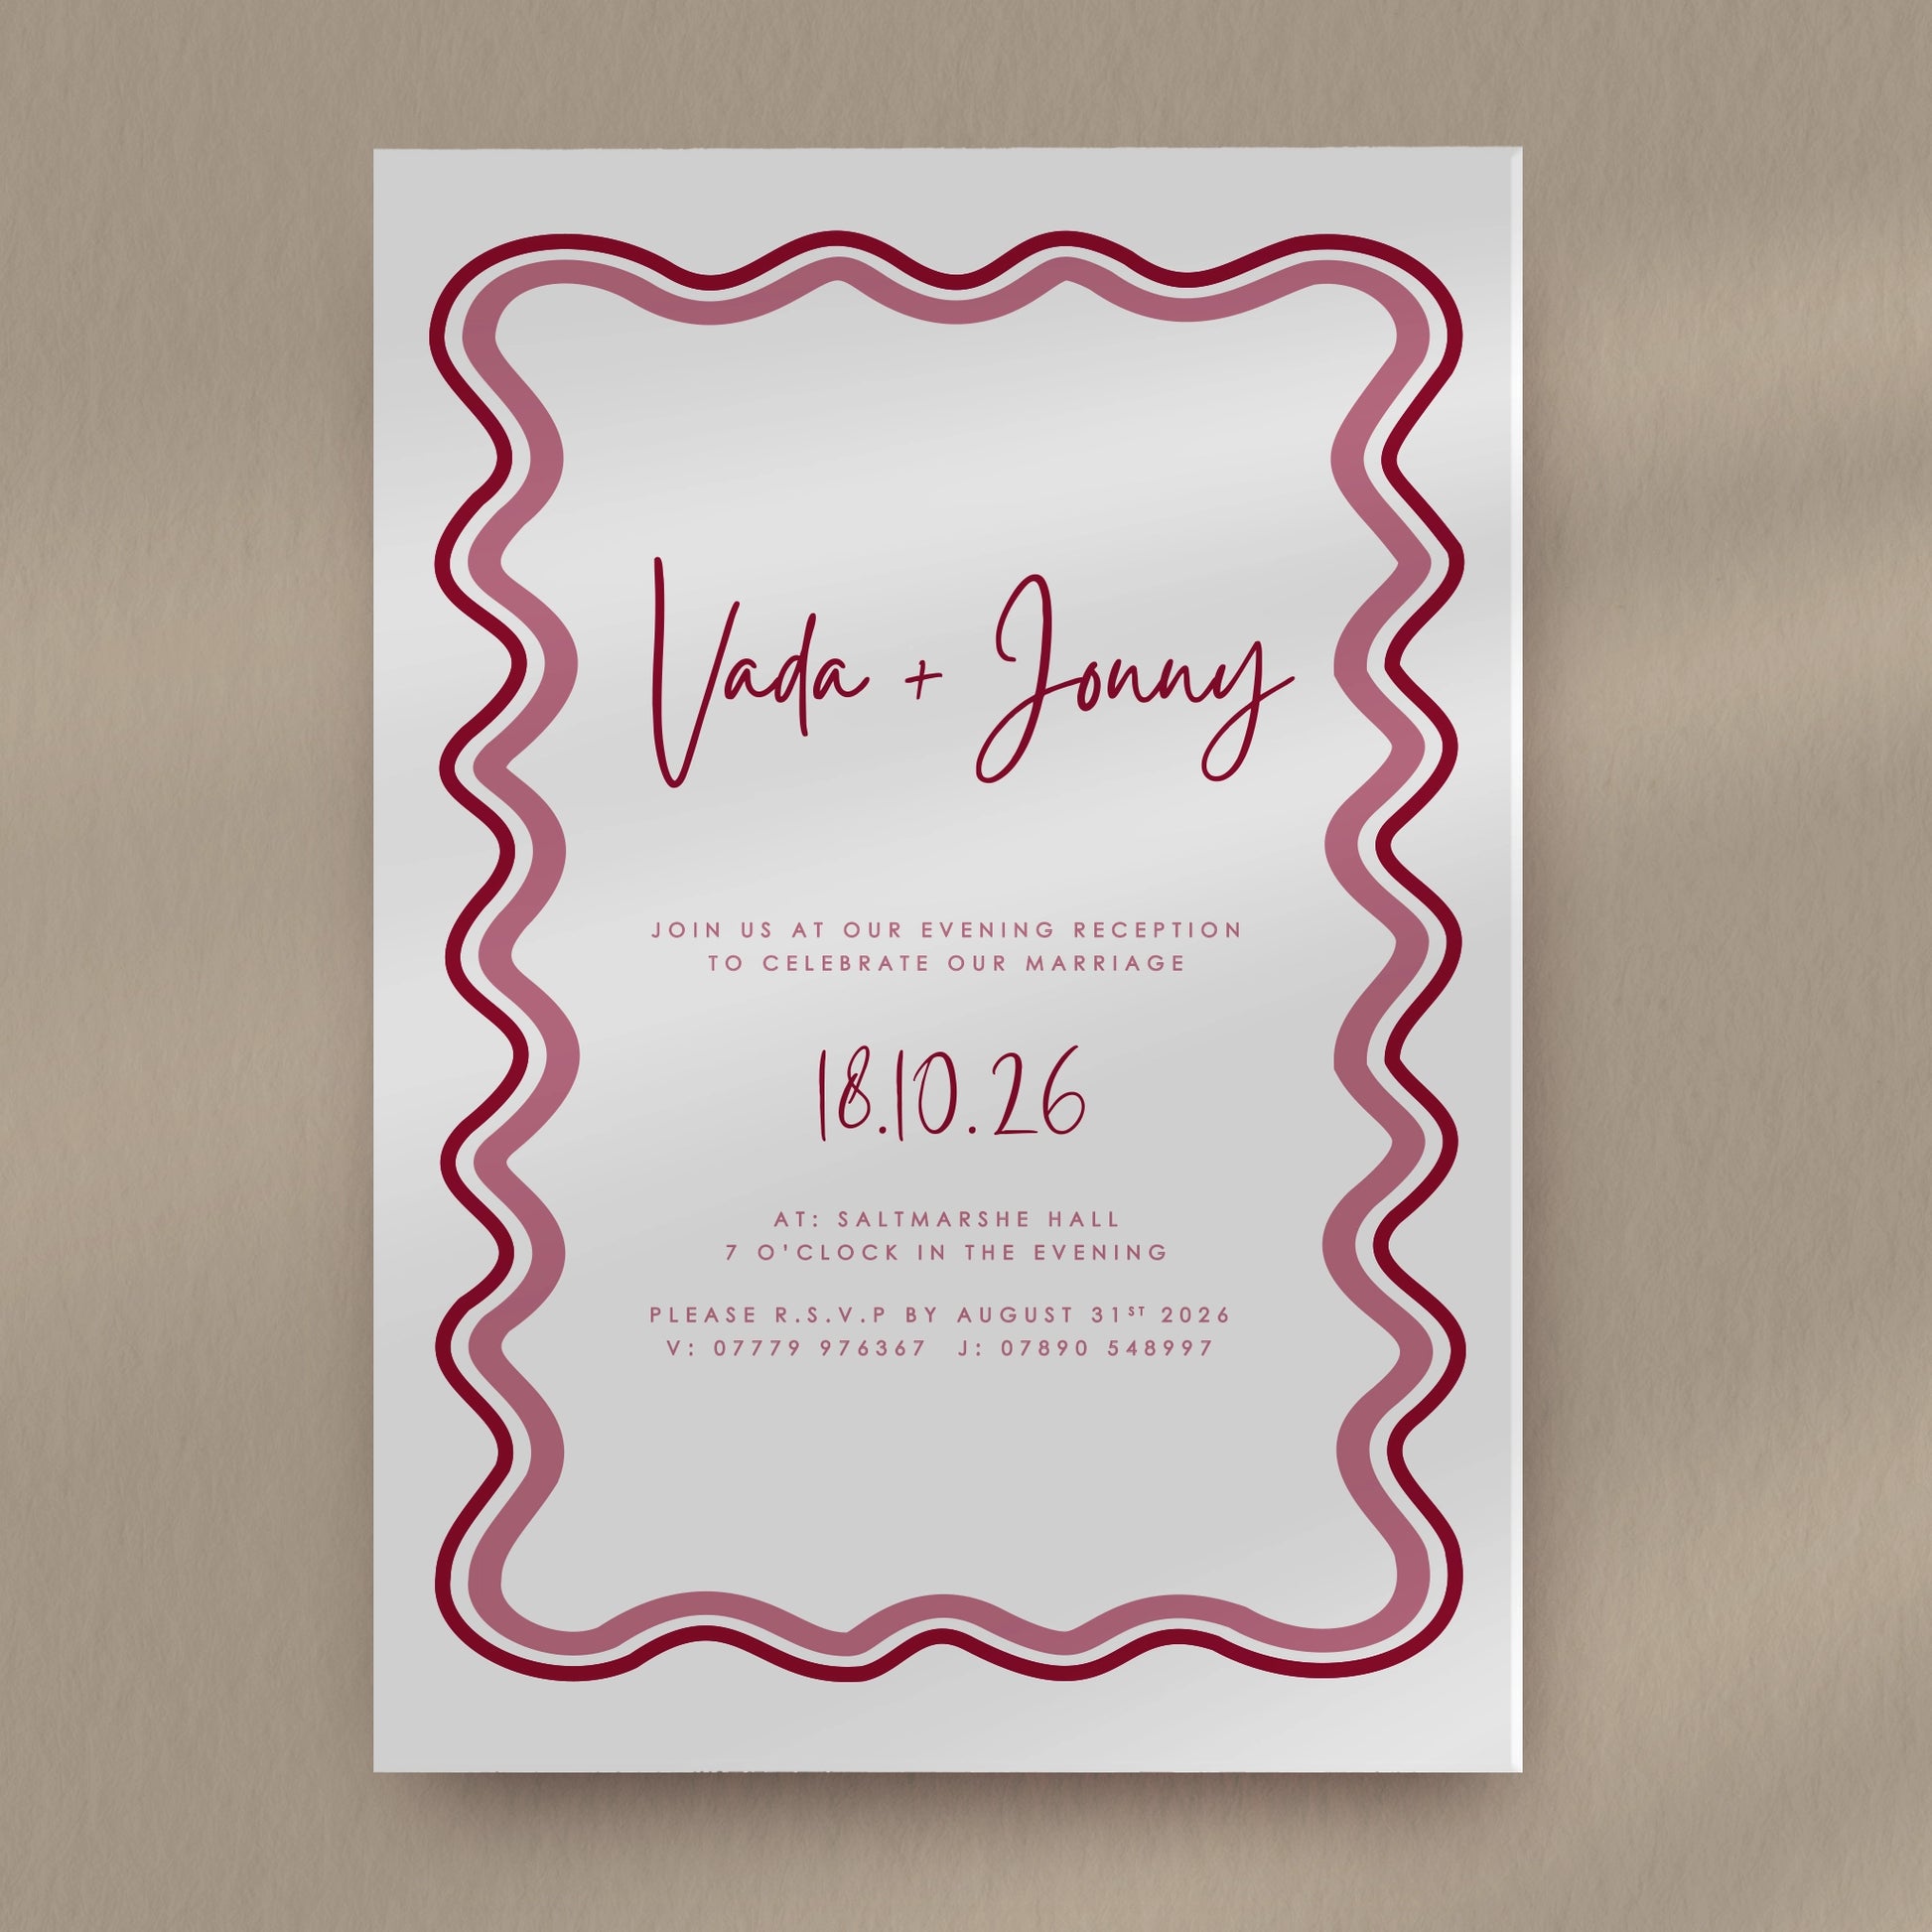 Evening Invitation Sample  Ivy and Gold Wedding Stationery Vada  